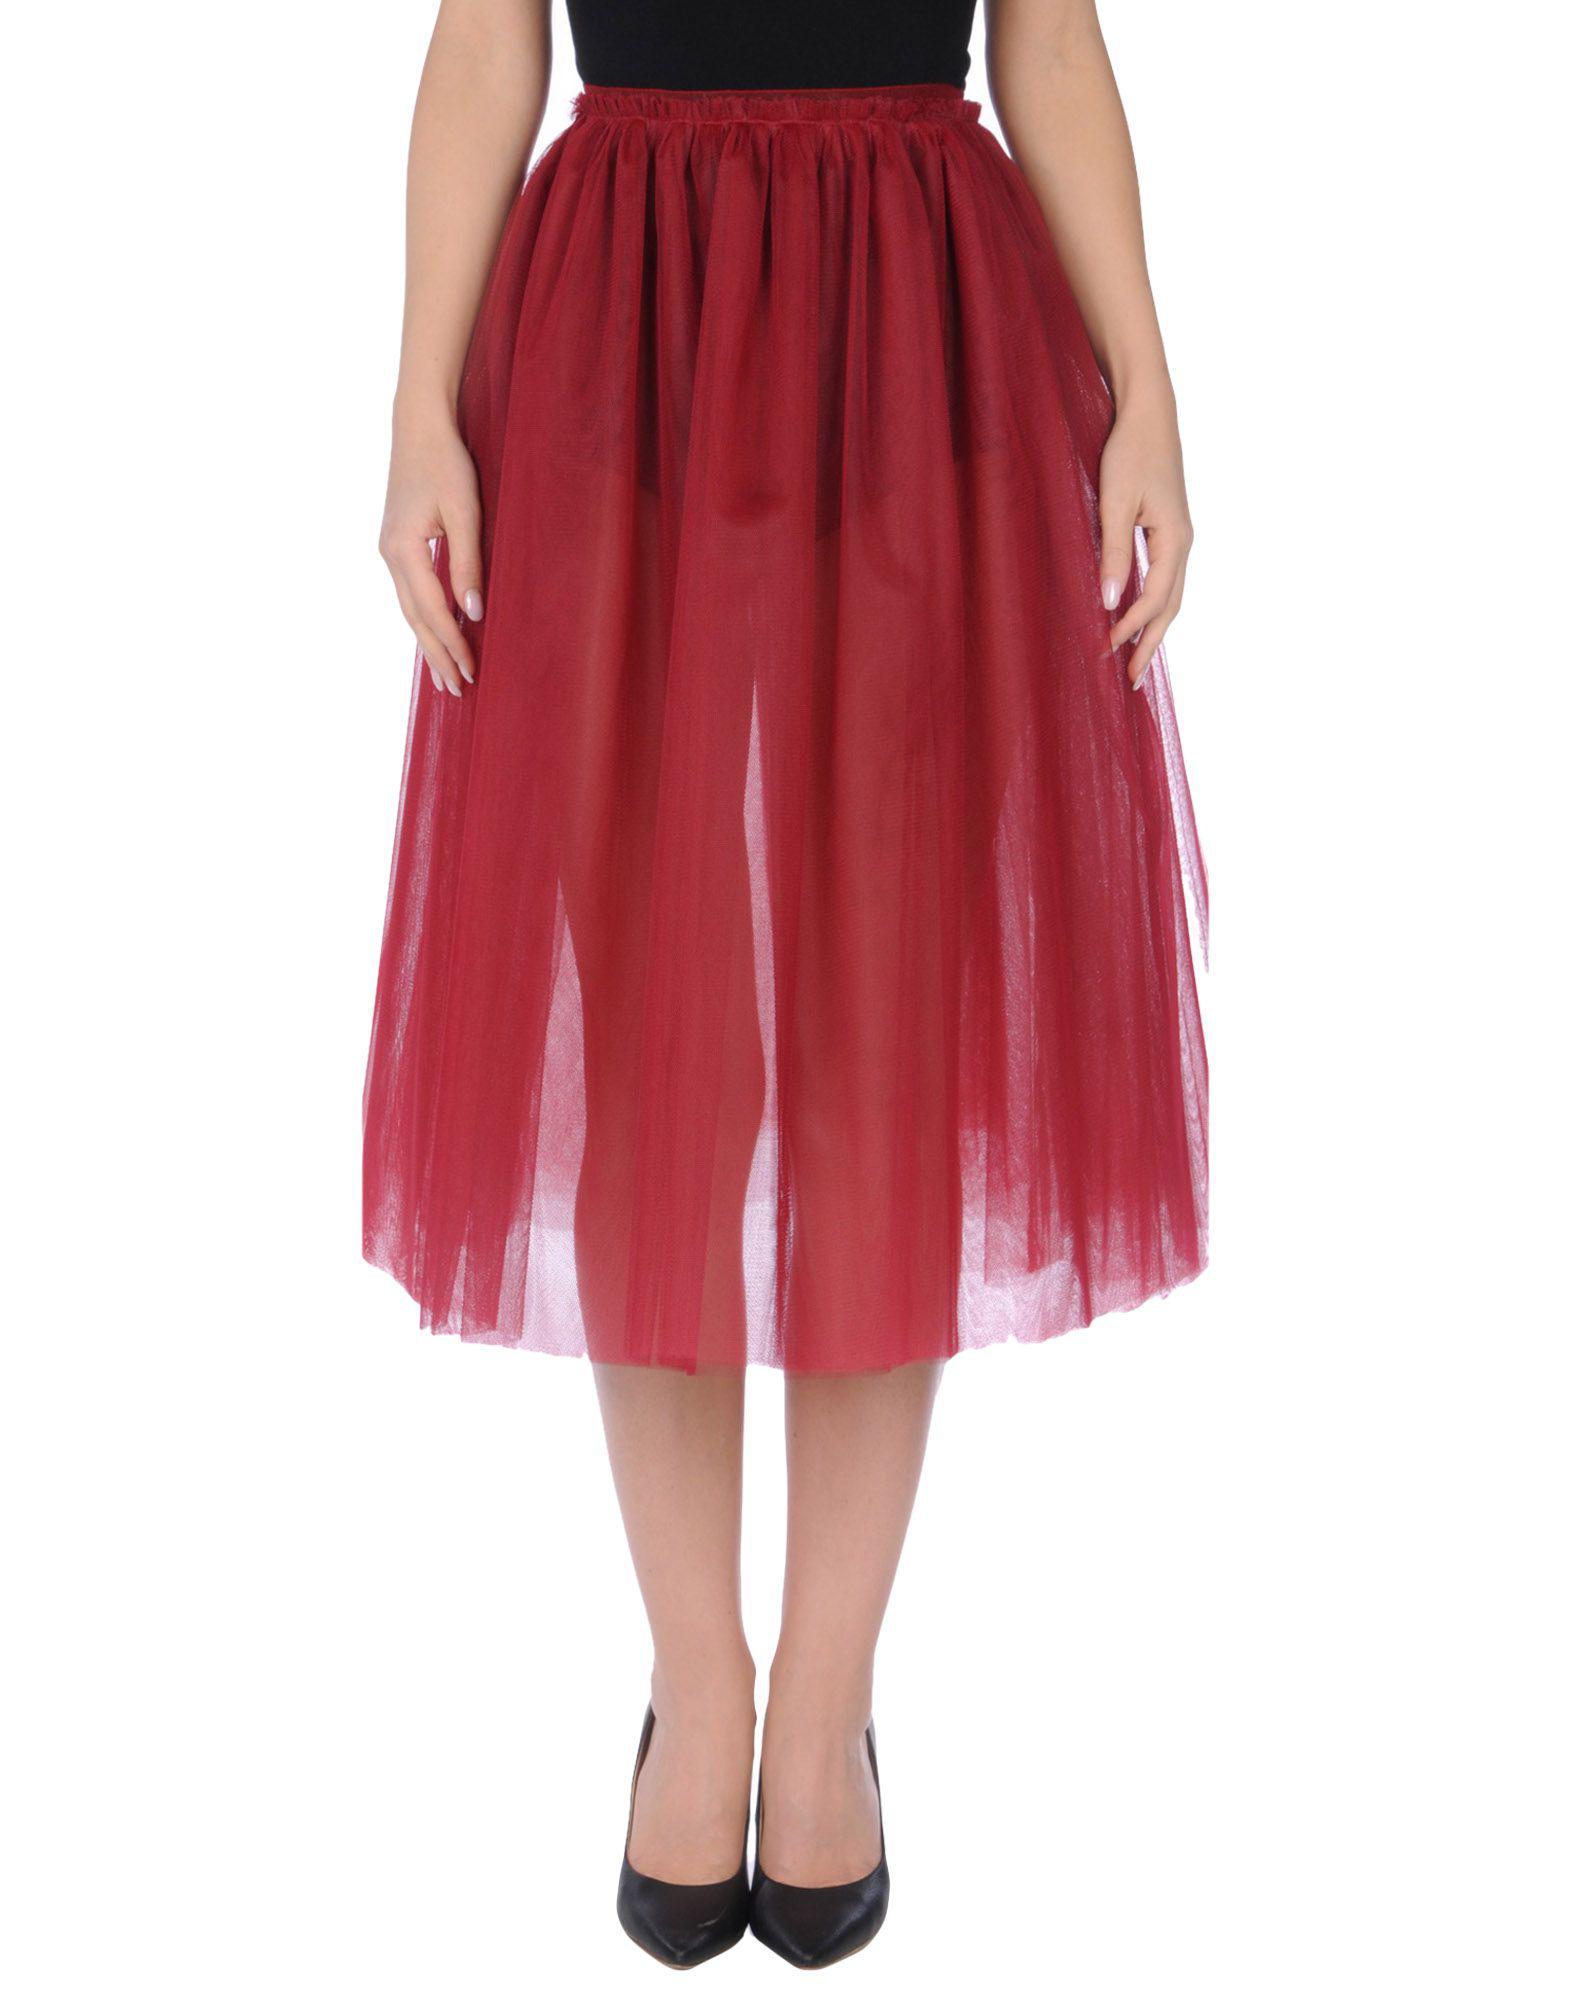 Golden Goose Deluxe Brand Tulle 3/4 Length Skirt in Maroon (Red) - Lyst